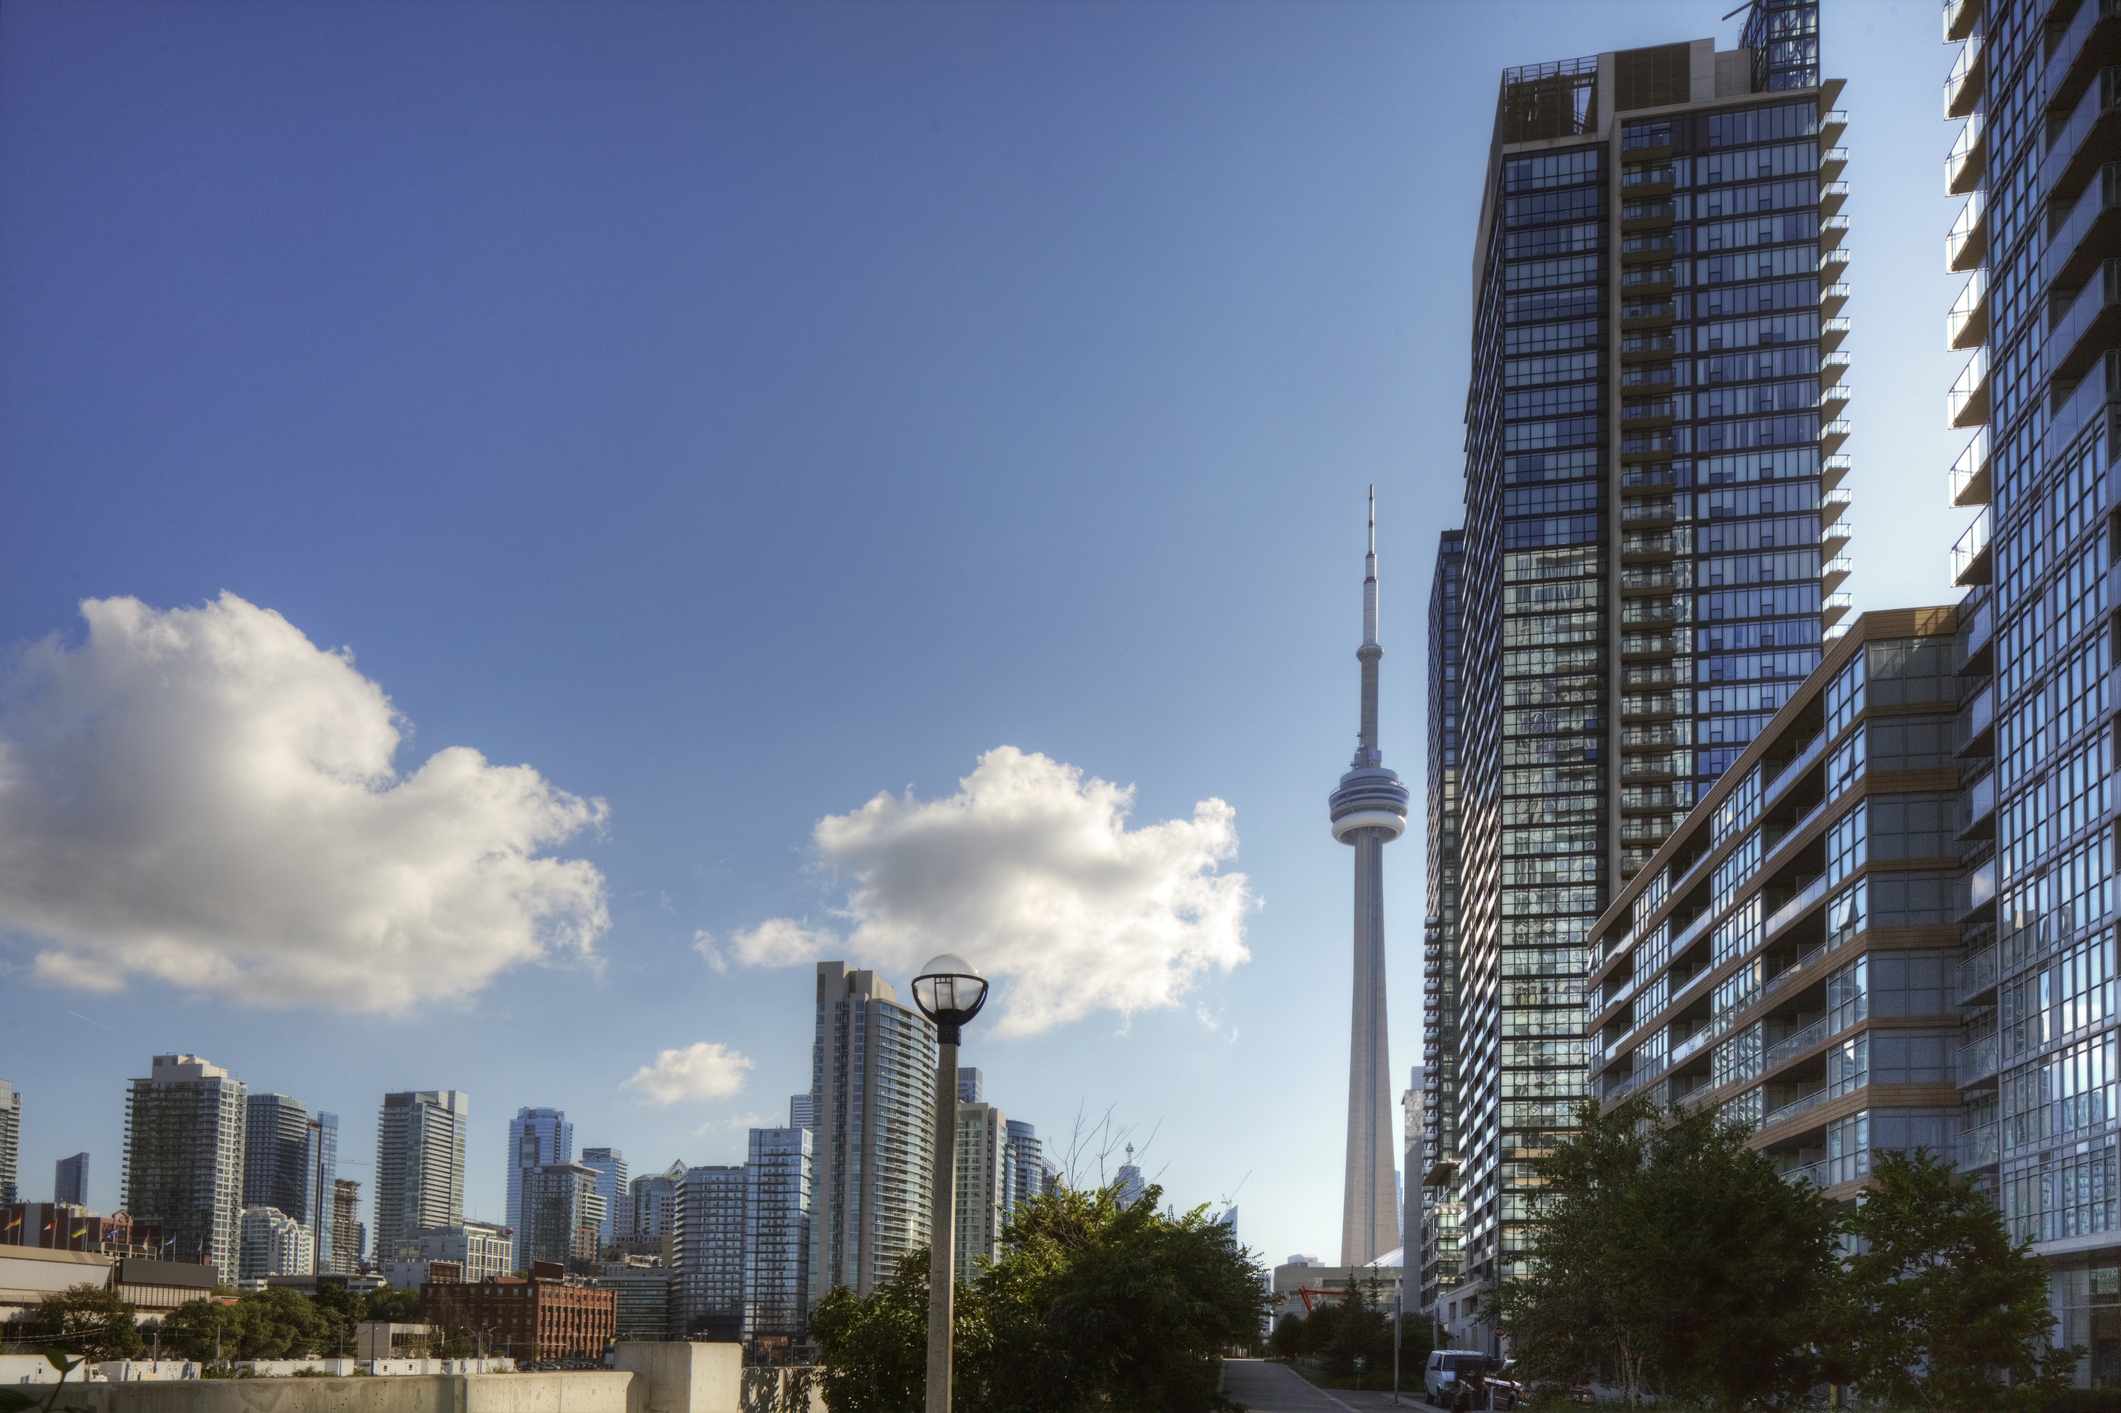 Metropolis of Toronto needs greater housing mix